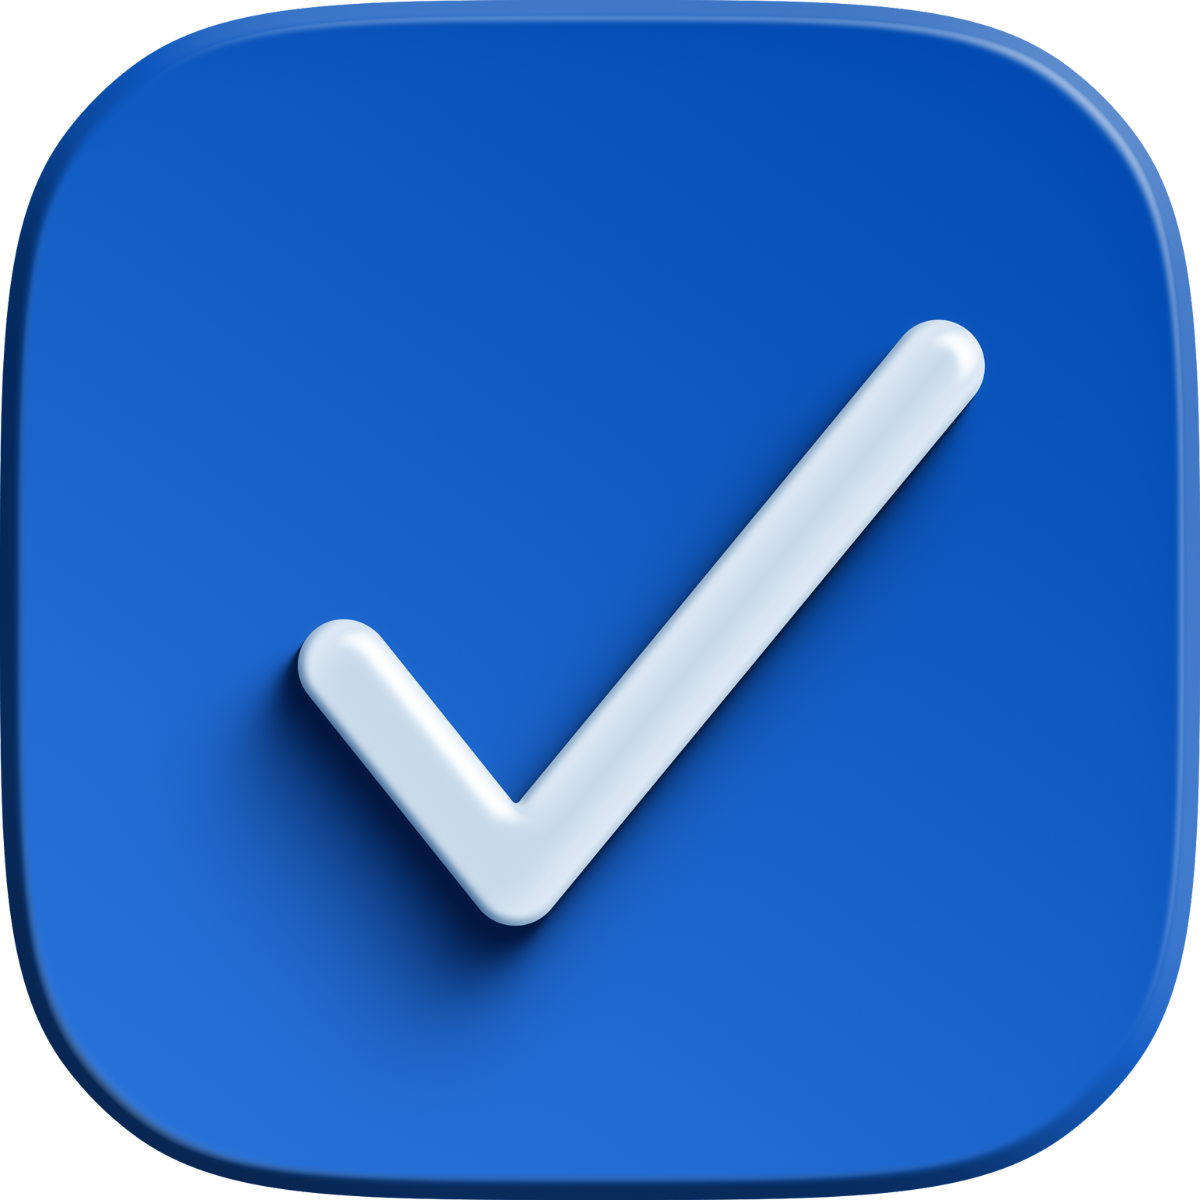 BlueCheck ‑ Age Verification Shopify App